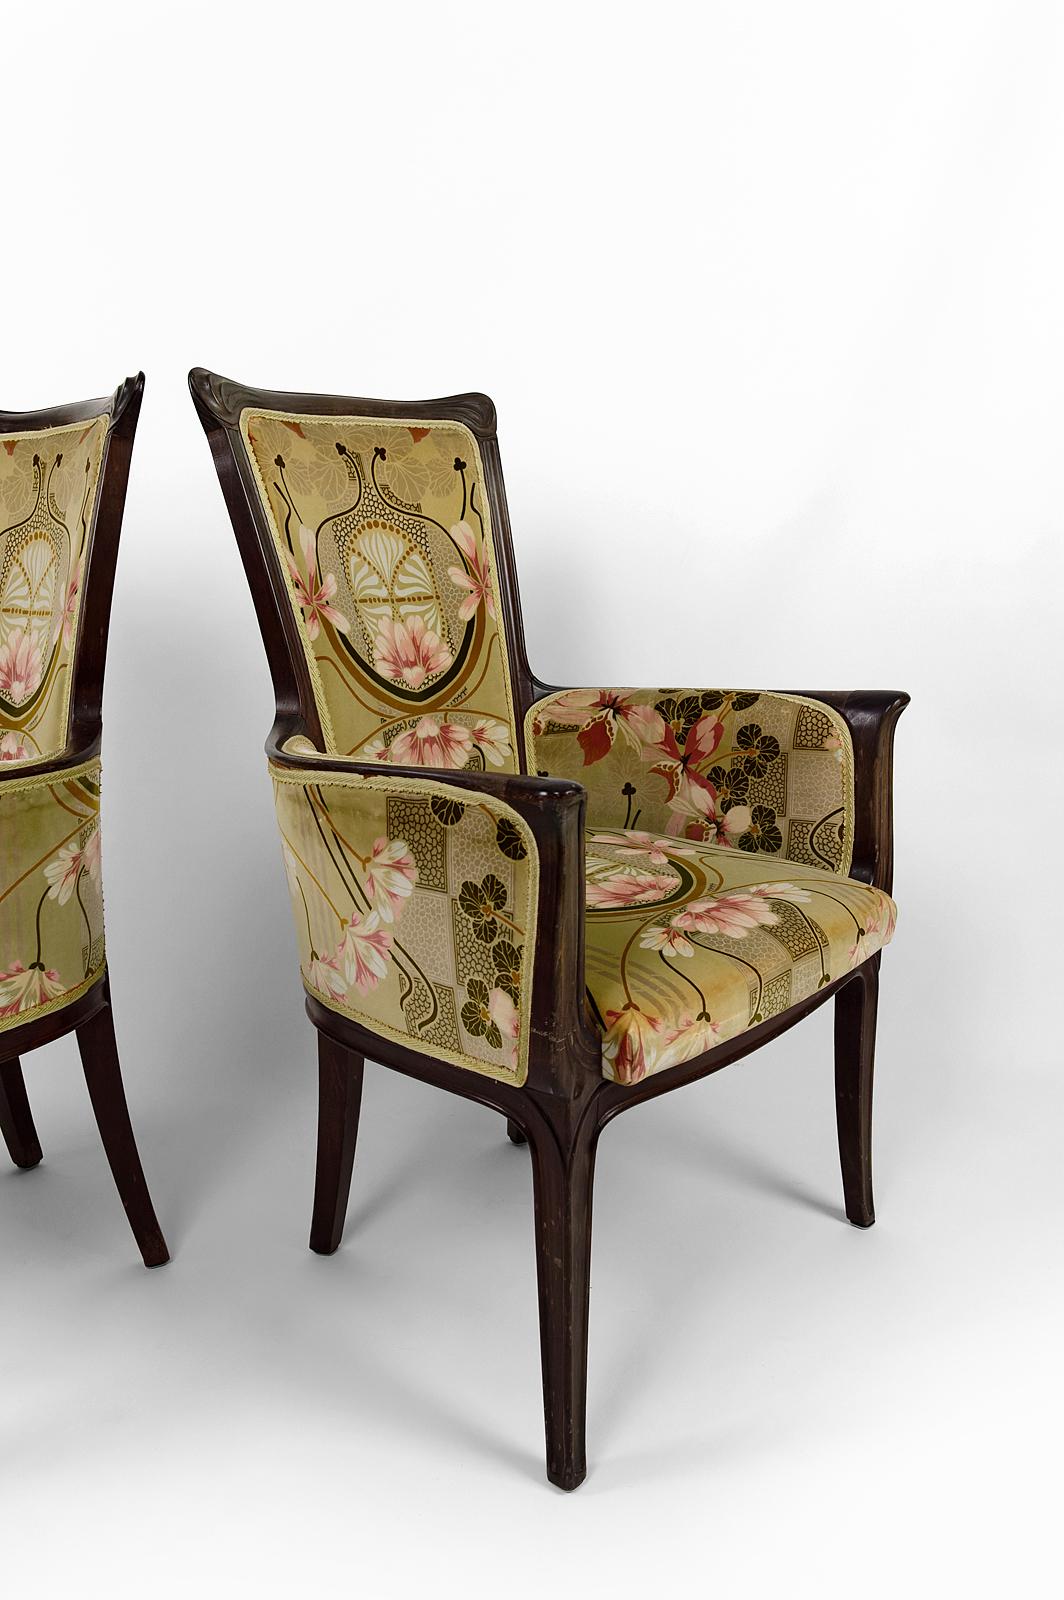 Art Nouveau salon set of 3, 2 armchairs and 1 chair, France, Circa 1900 For Sale 7